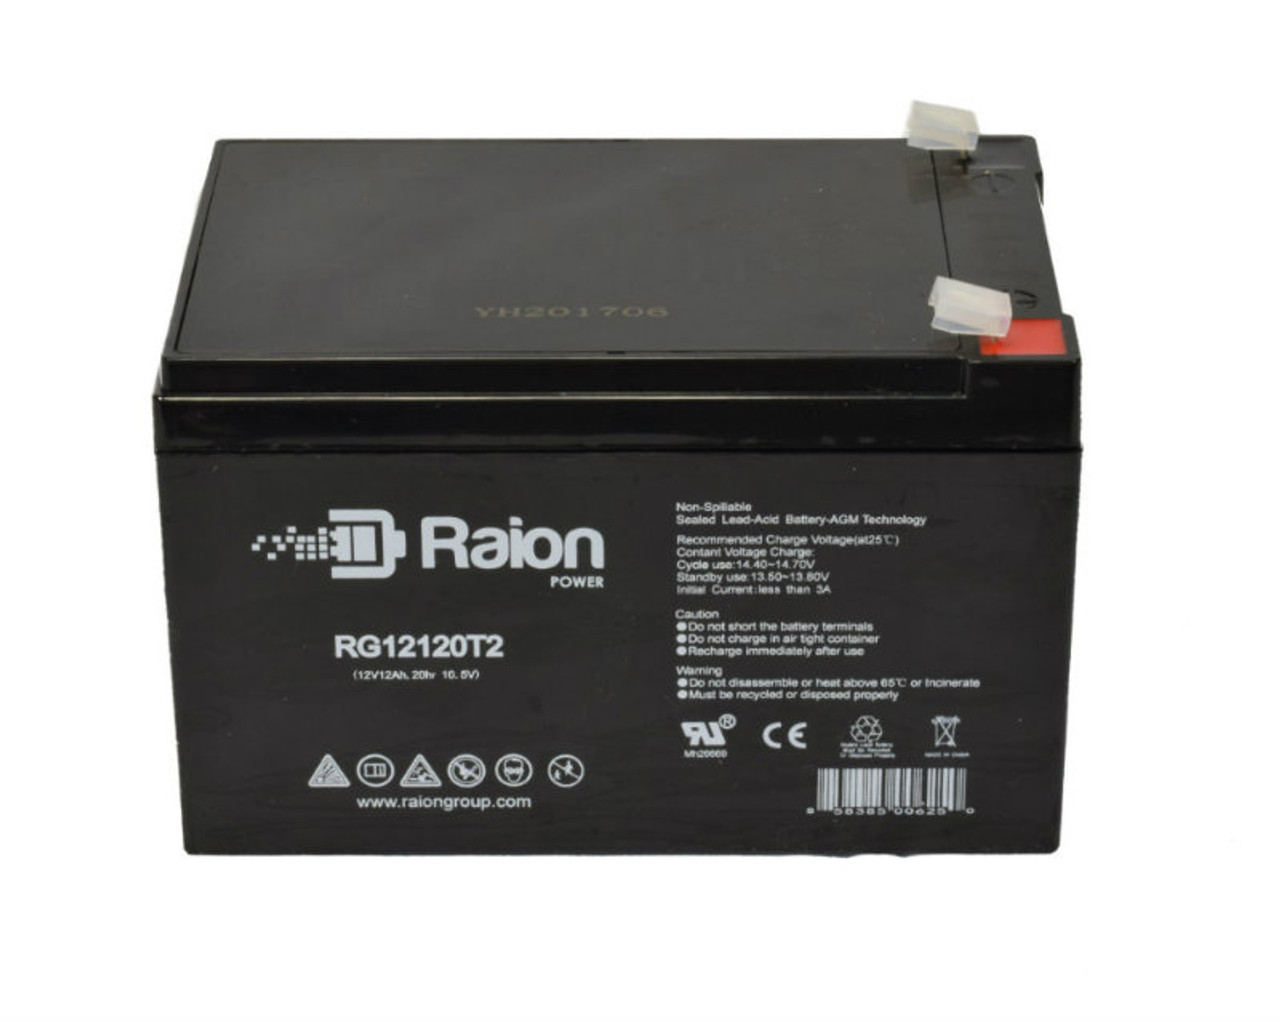 Raion Power RG12120T2 SLA Battery for Orthopedic Systems 5803 Advanced Control Modular Base